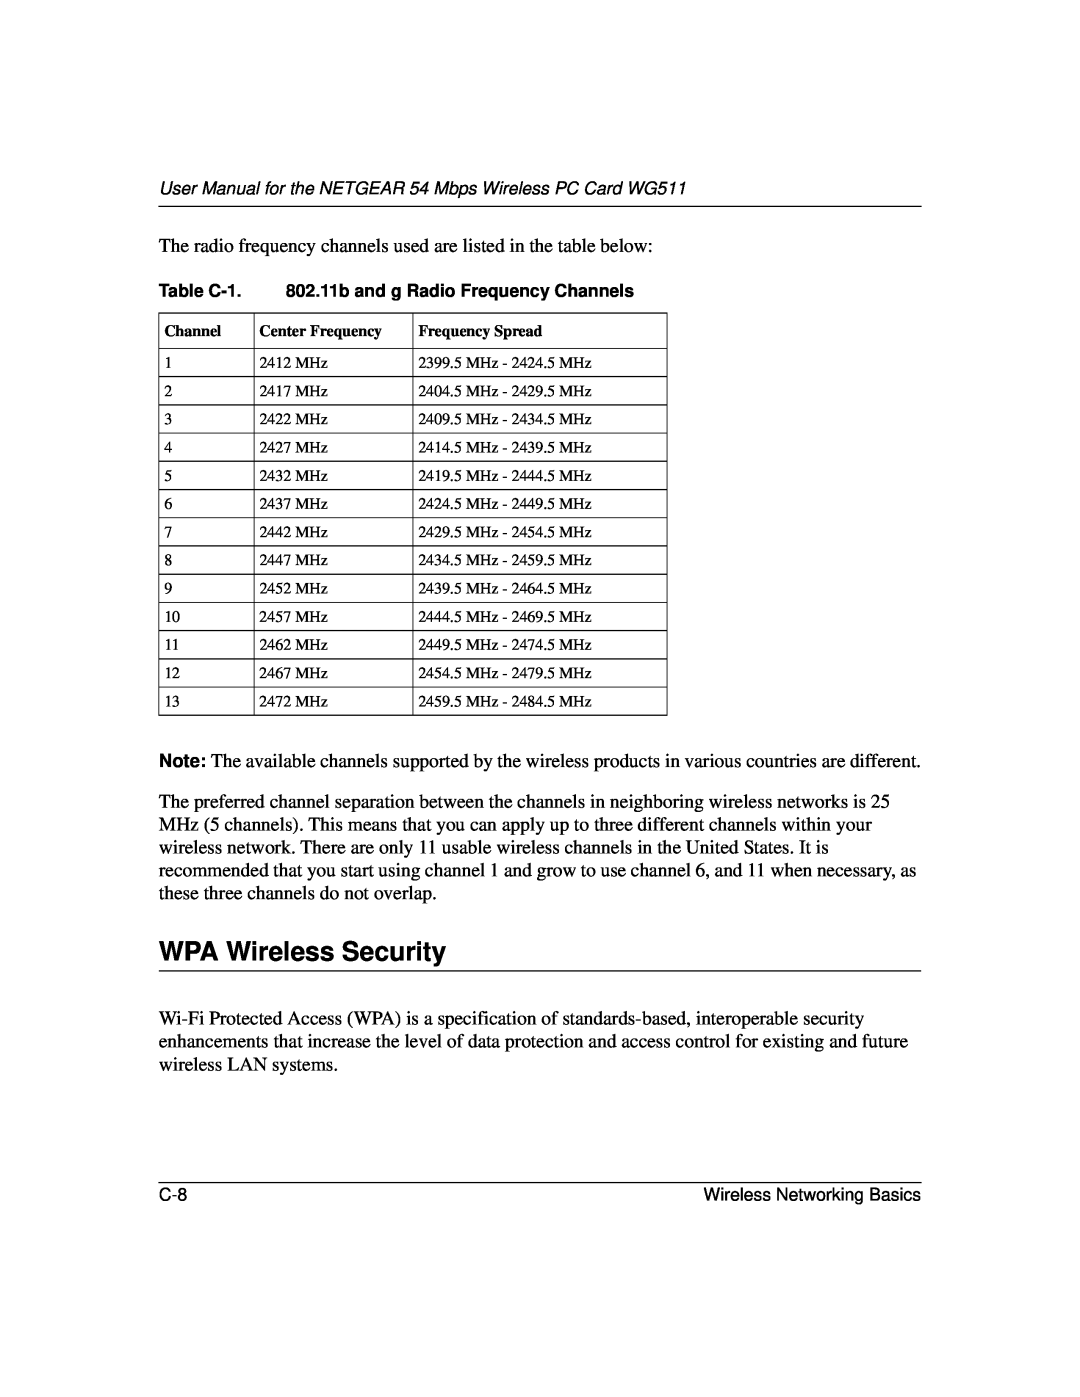 NETGEAR WGE111 user manual WPA Wireless Security 